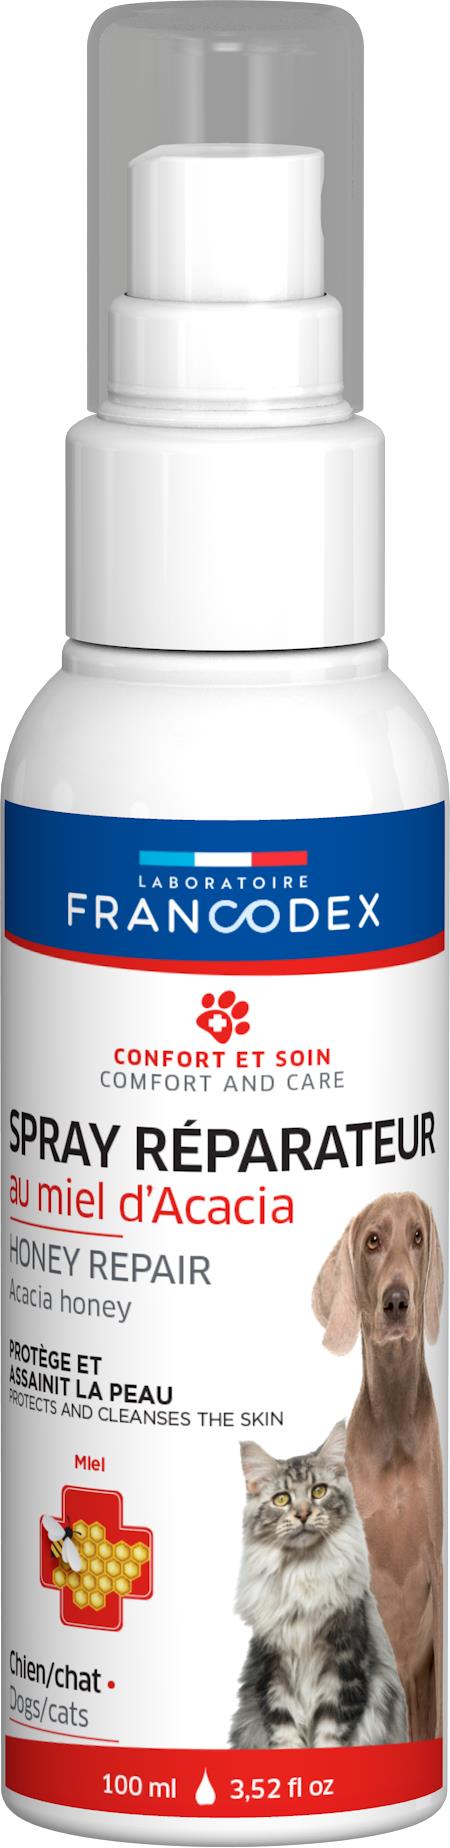 Soin – Francodex Spray réparateur au miel d’acacia – 100 ml 982702